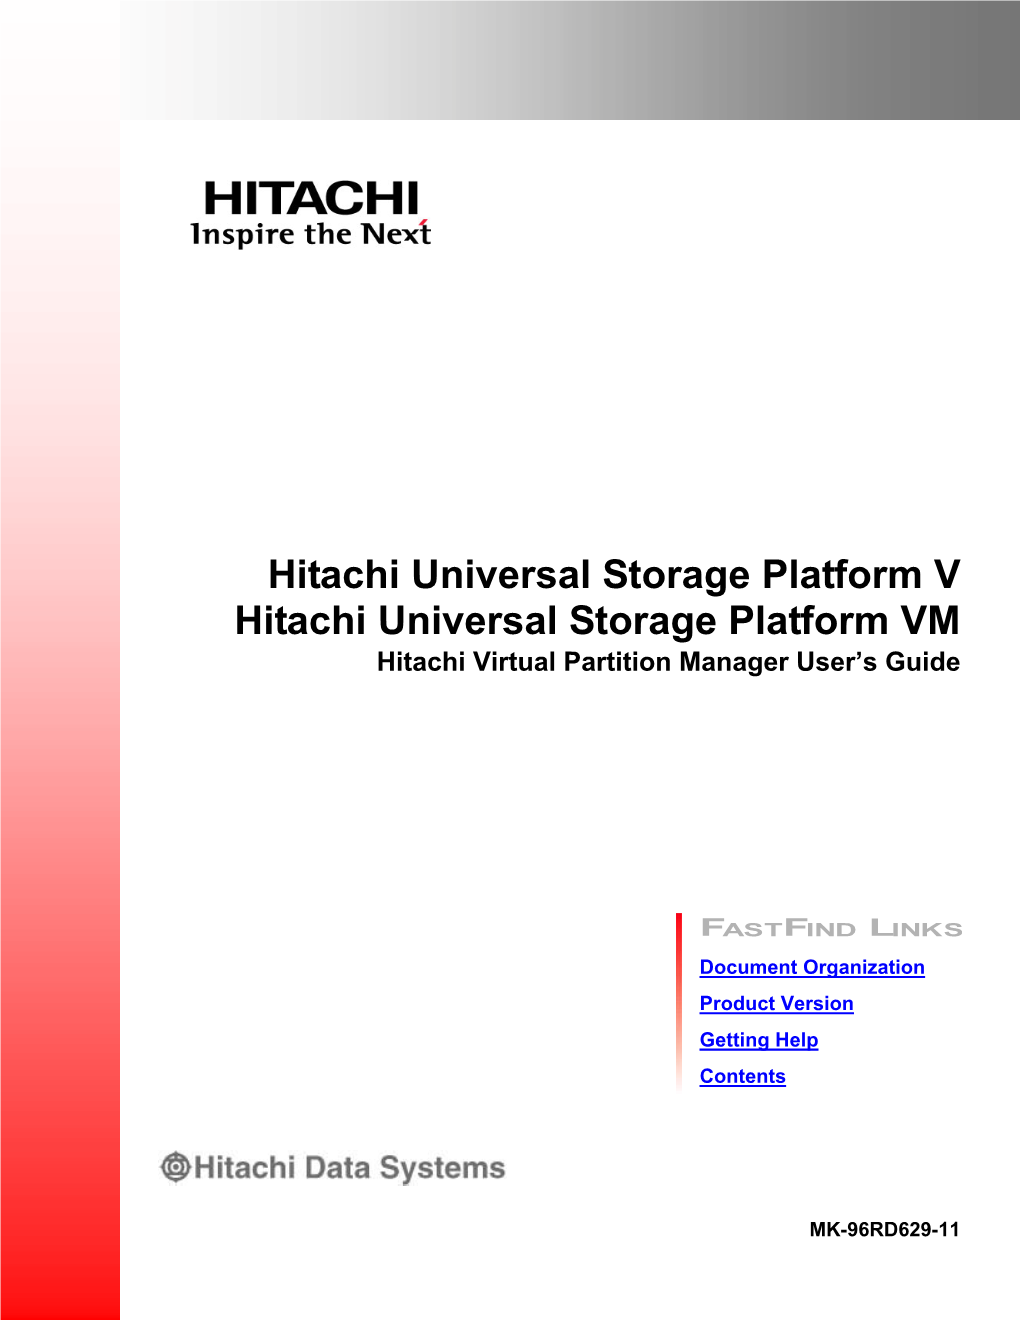 Hitachi USP V/VM Hitachi Virtual Partition Manager User's Guide